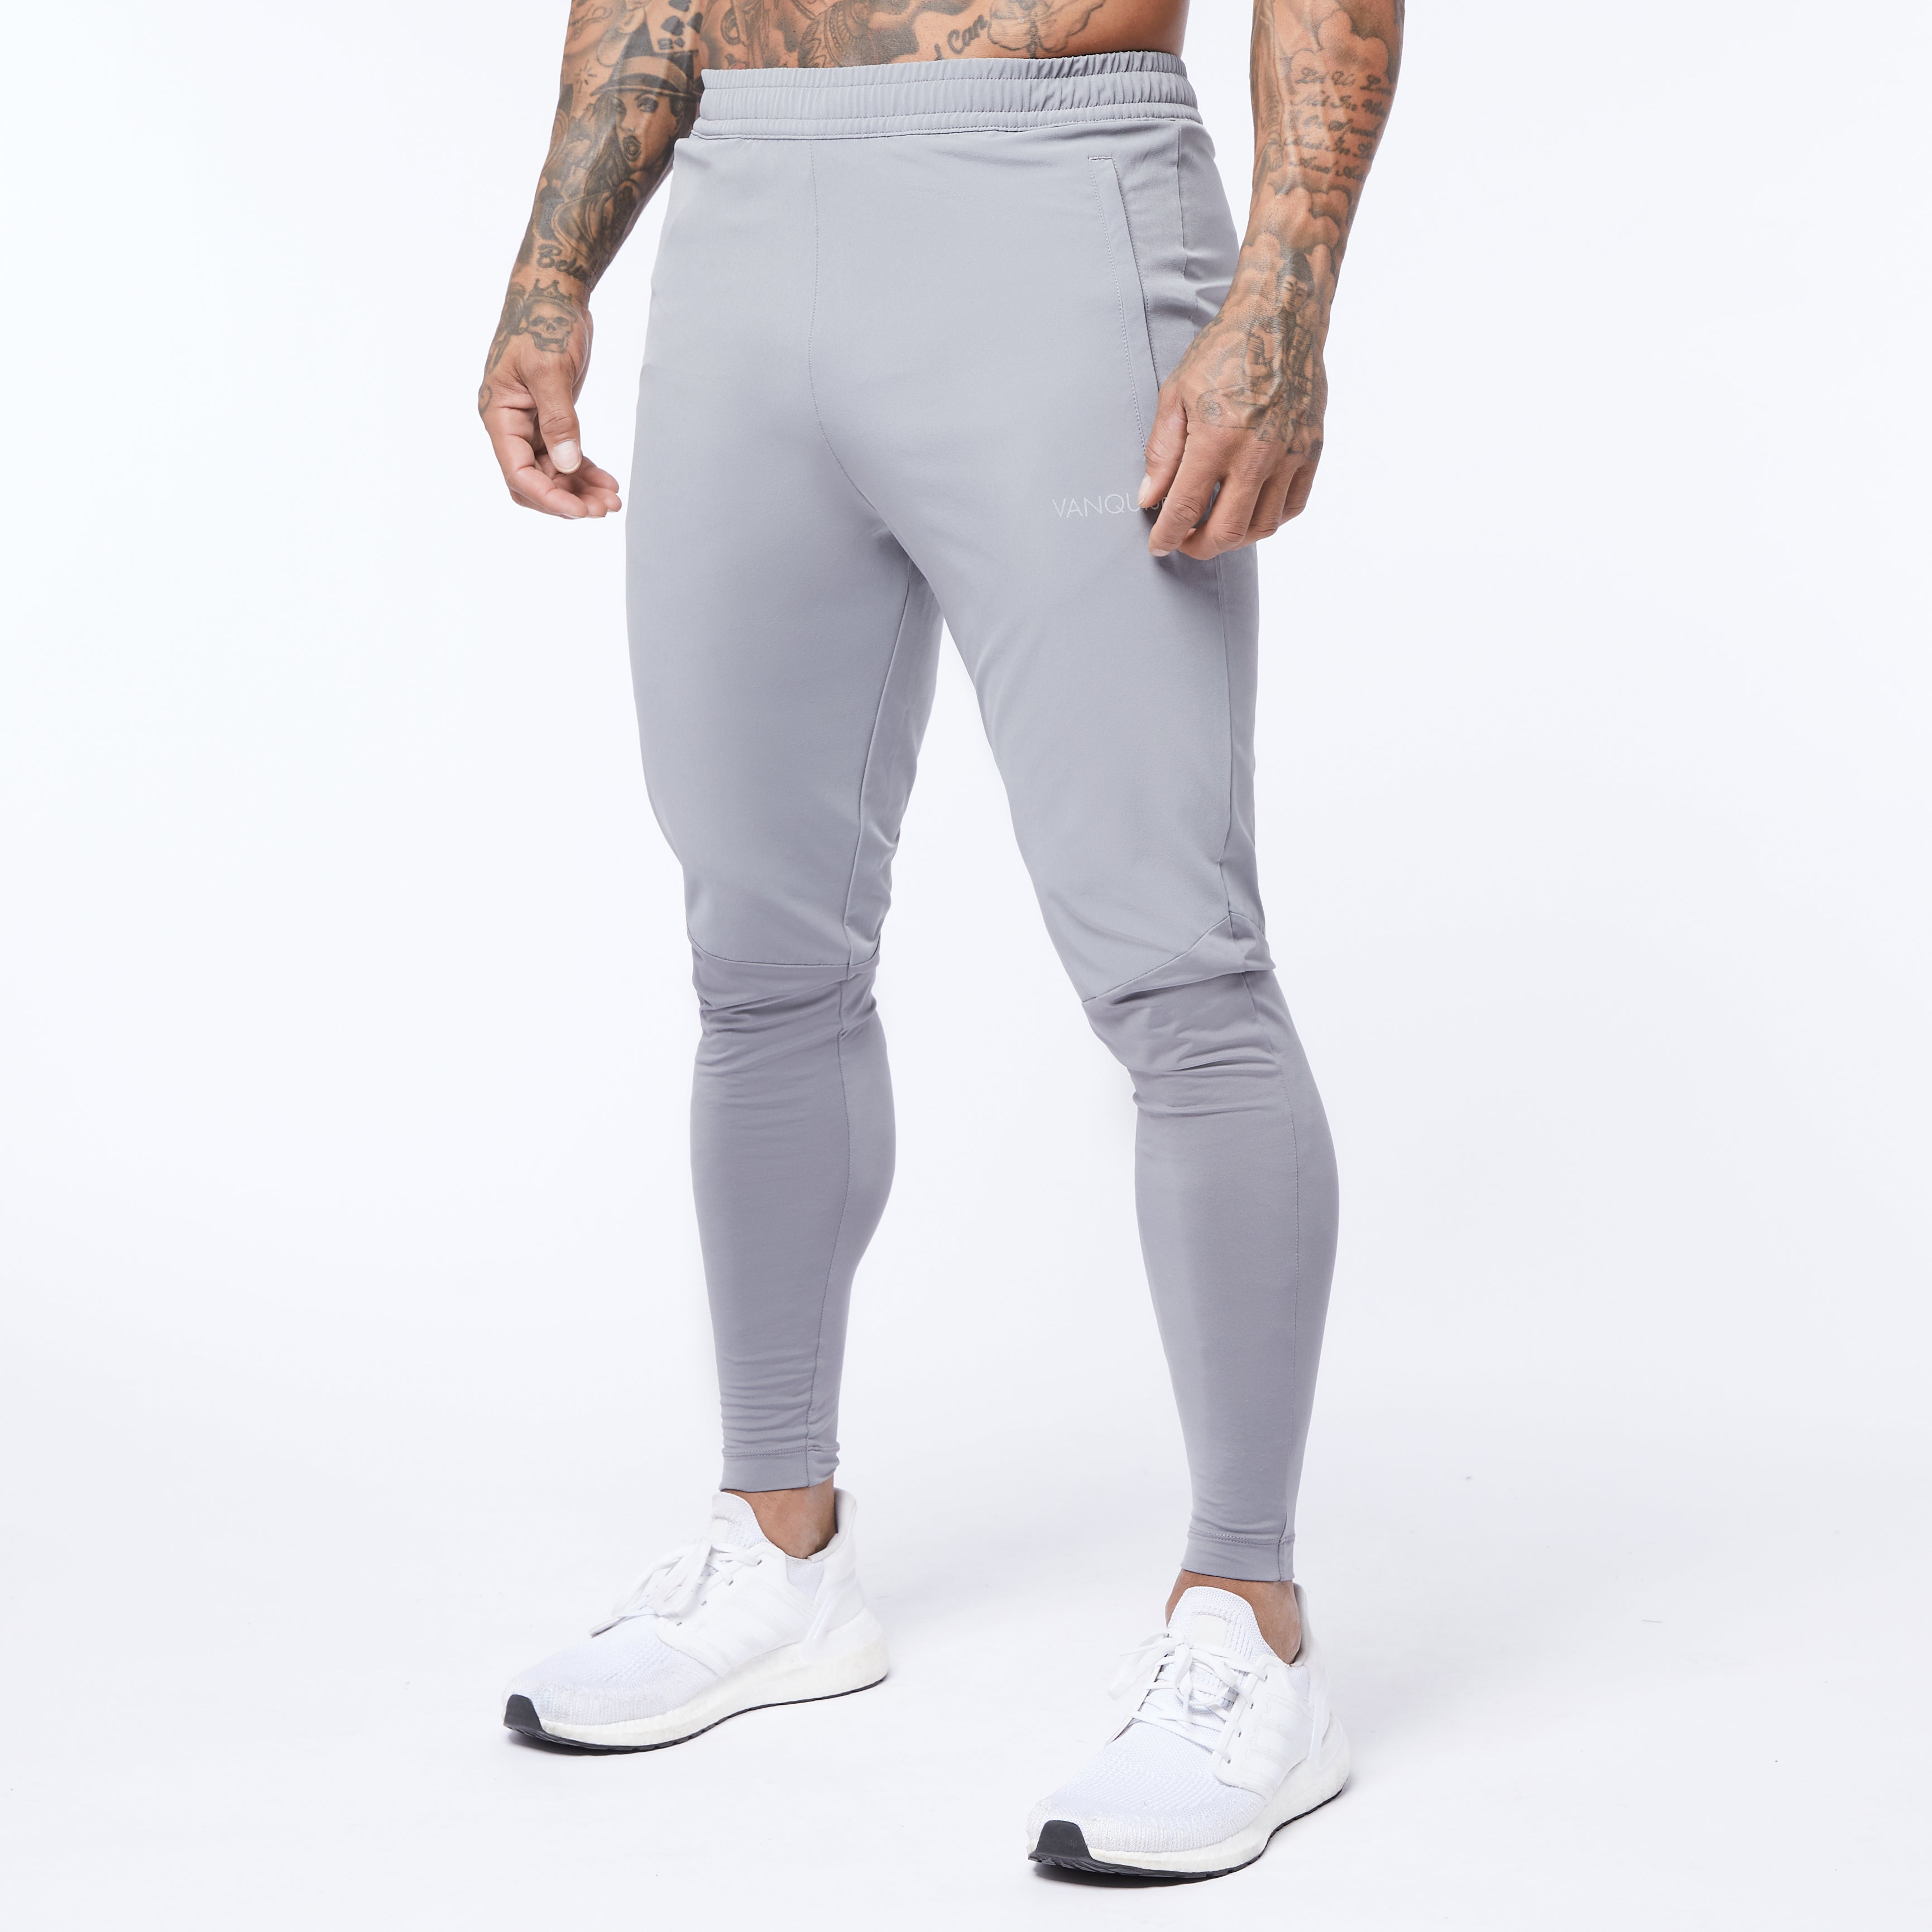 Vanquish Core Performance Grey Training Pants